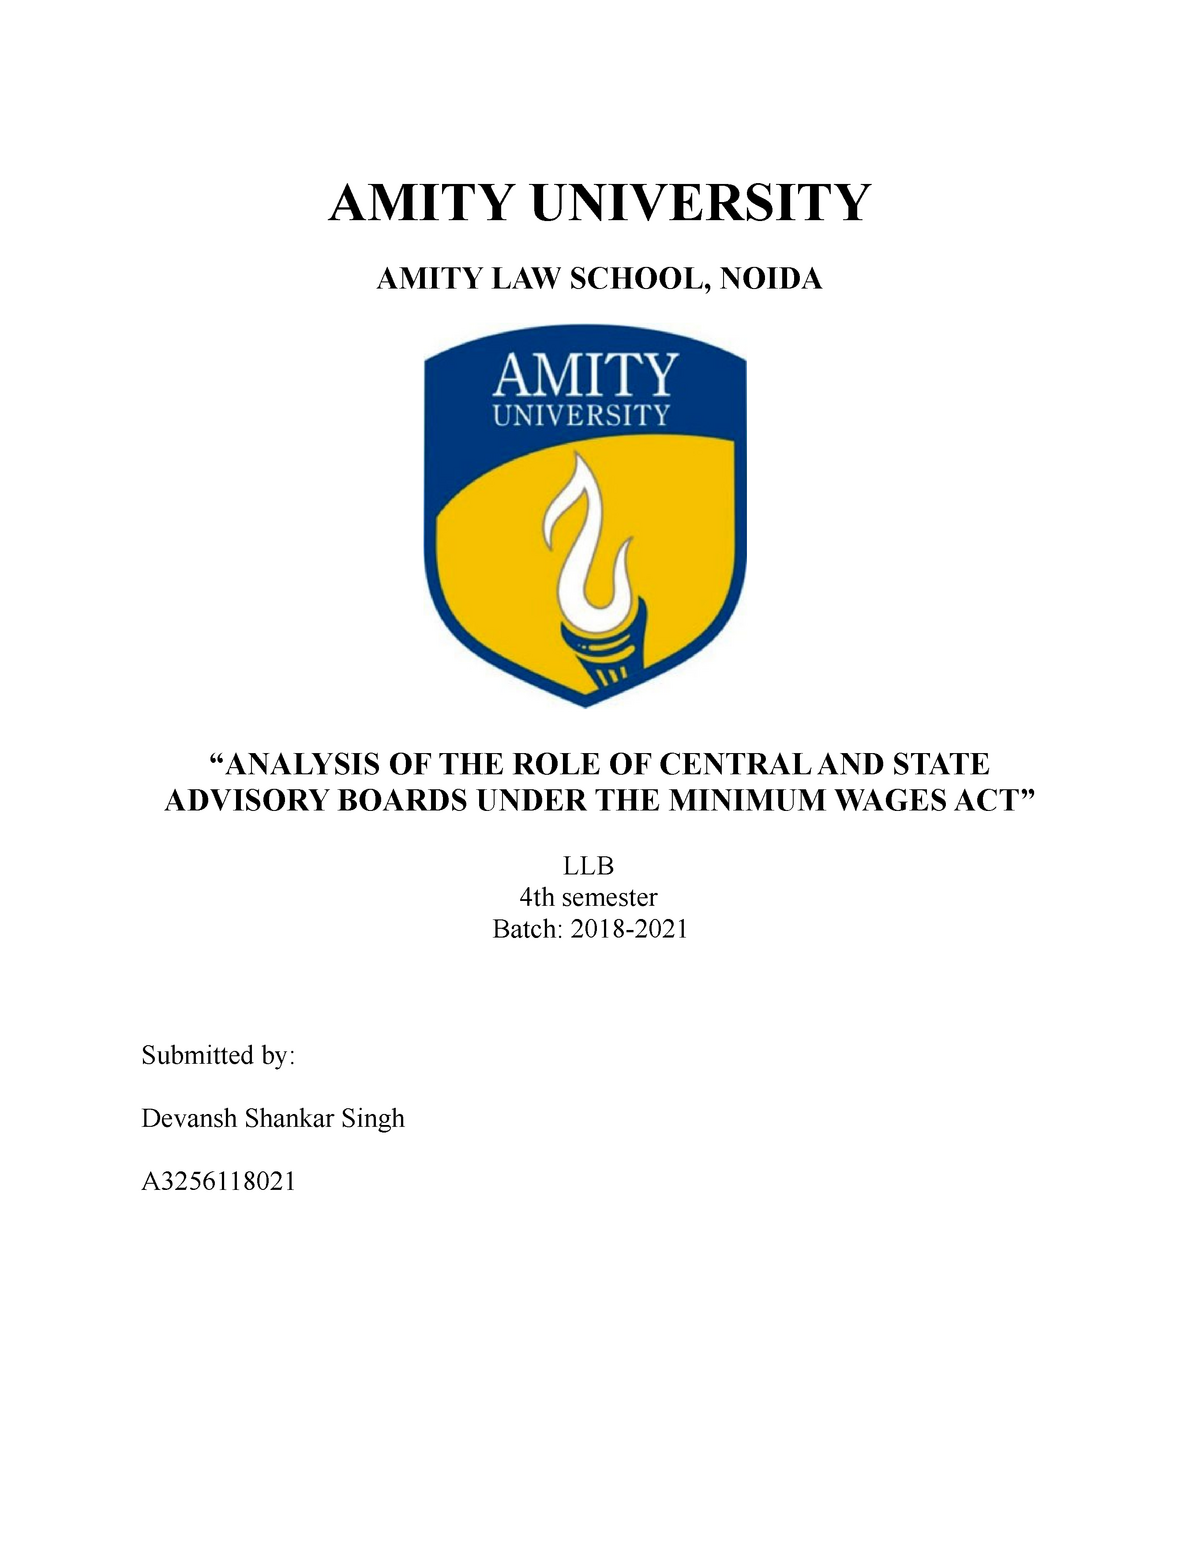 amity university assignment